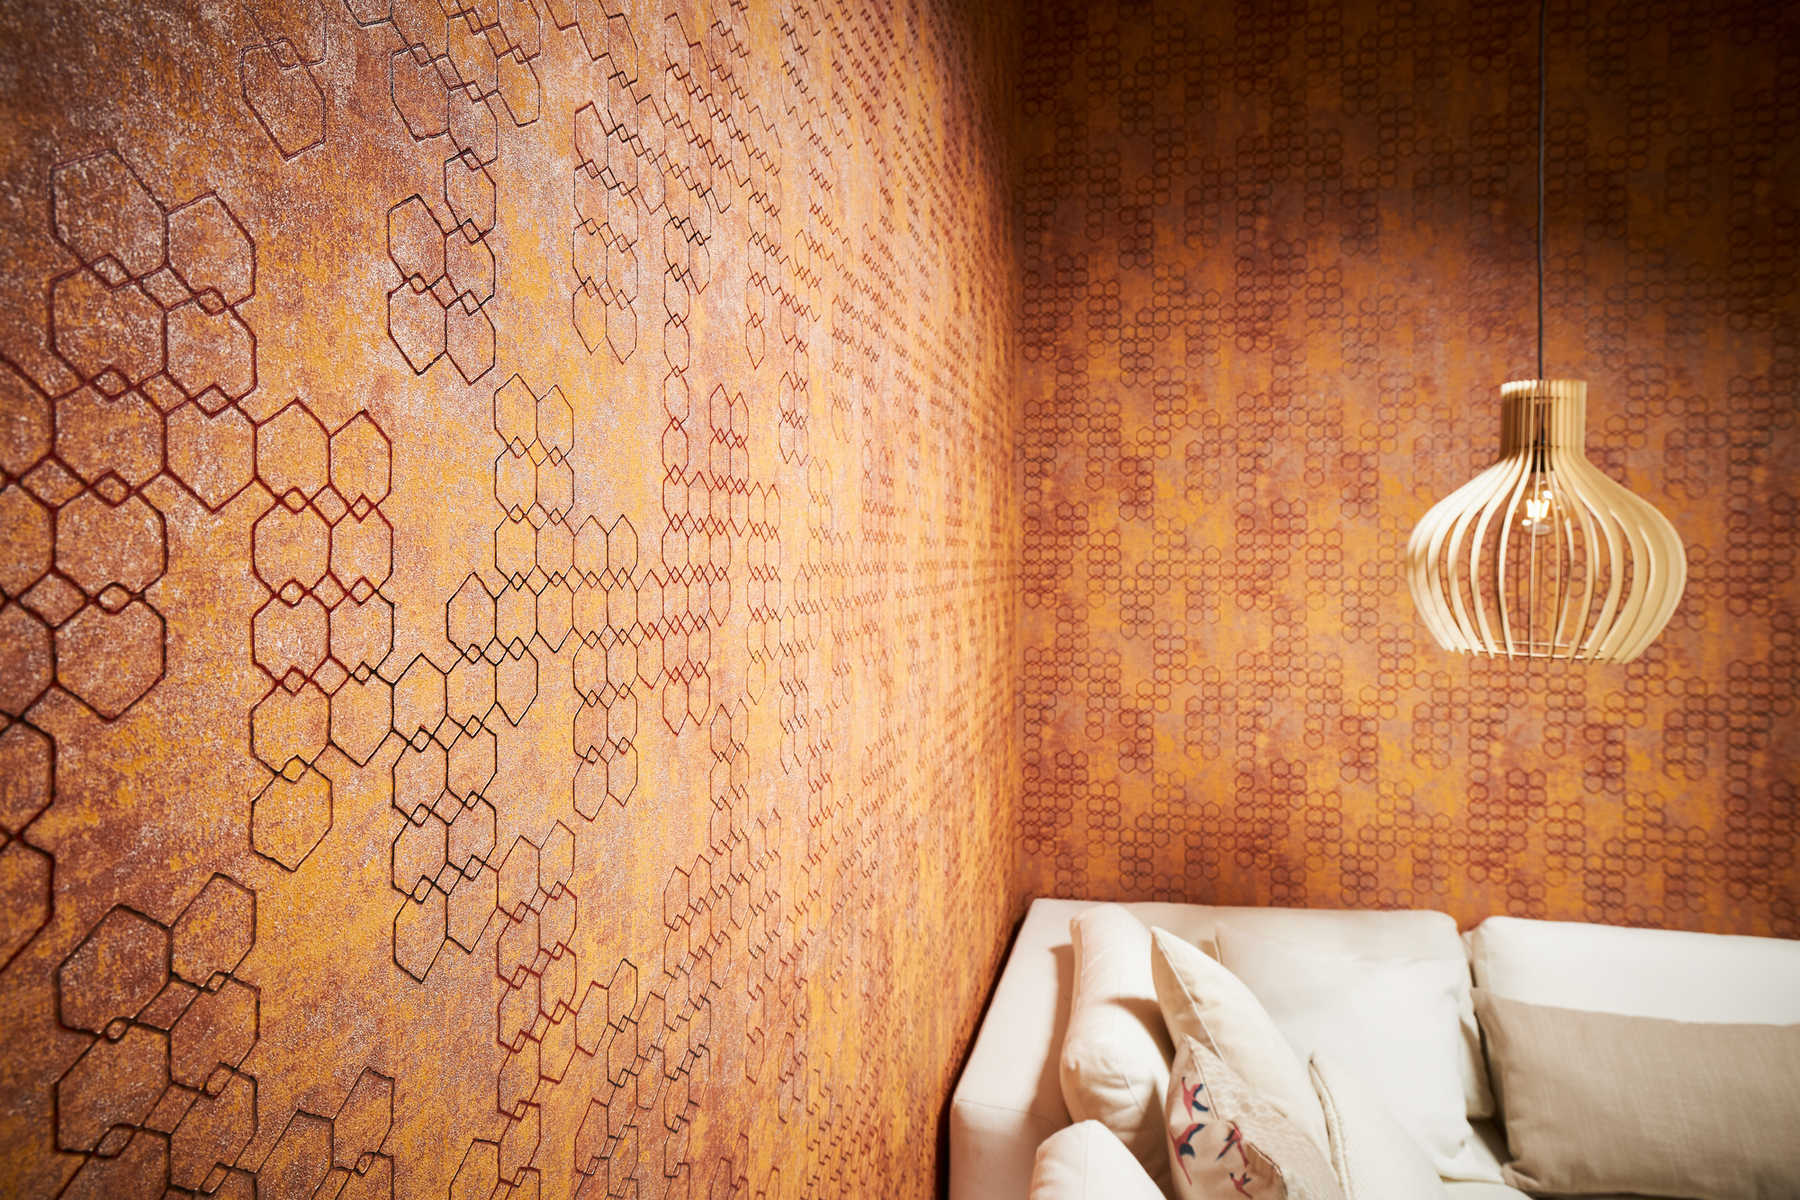             Geometric pattern wallpaper in industrial style - orange, gold, brown
        